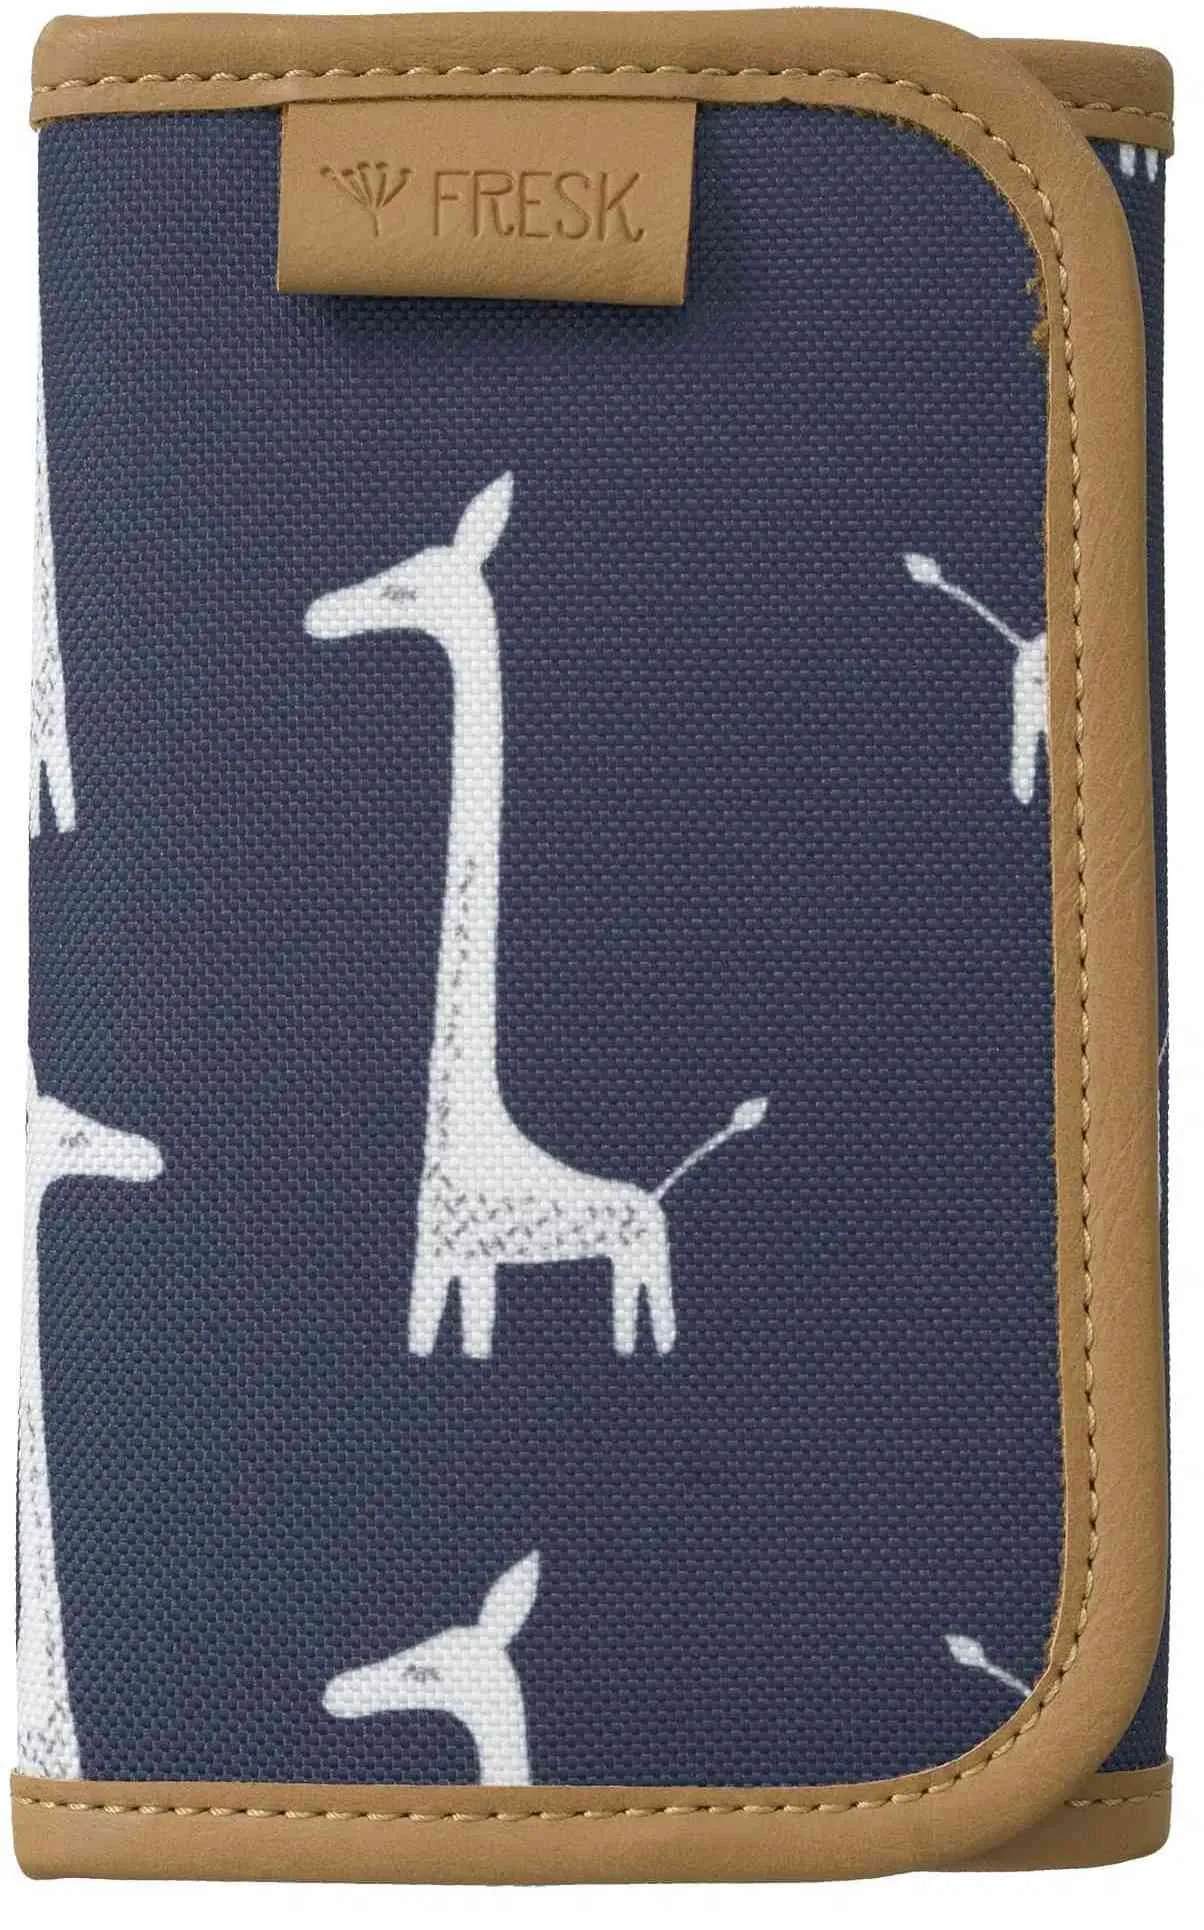 FRESK skladacia peňaženka Giraf 1×1 ks, skladacia peňaženka